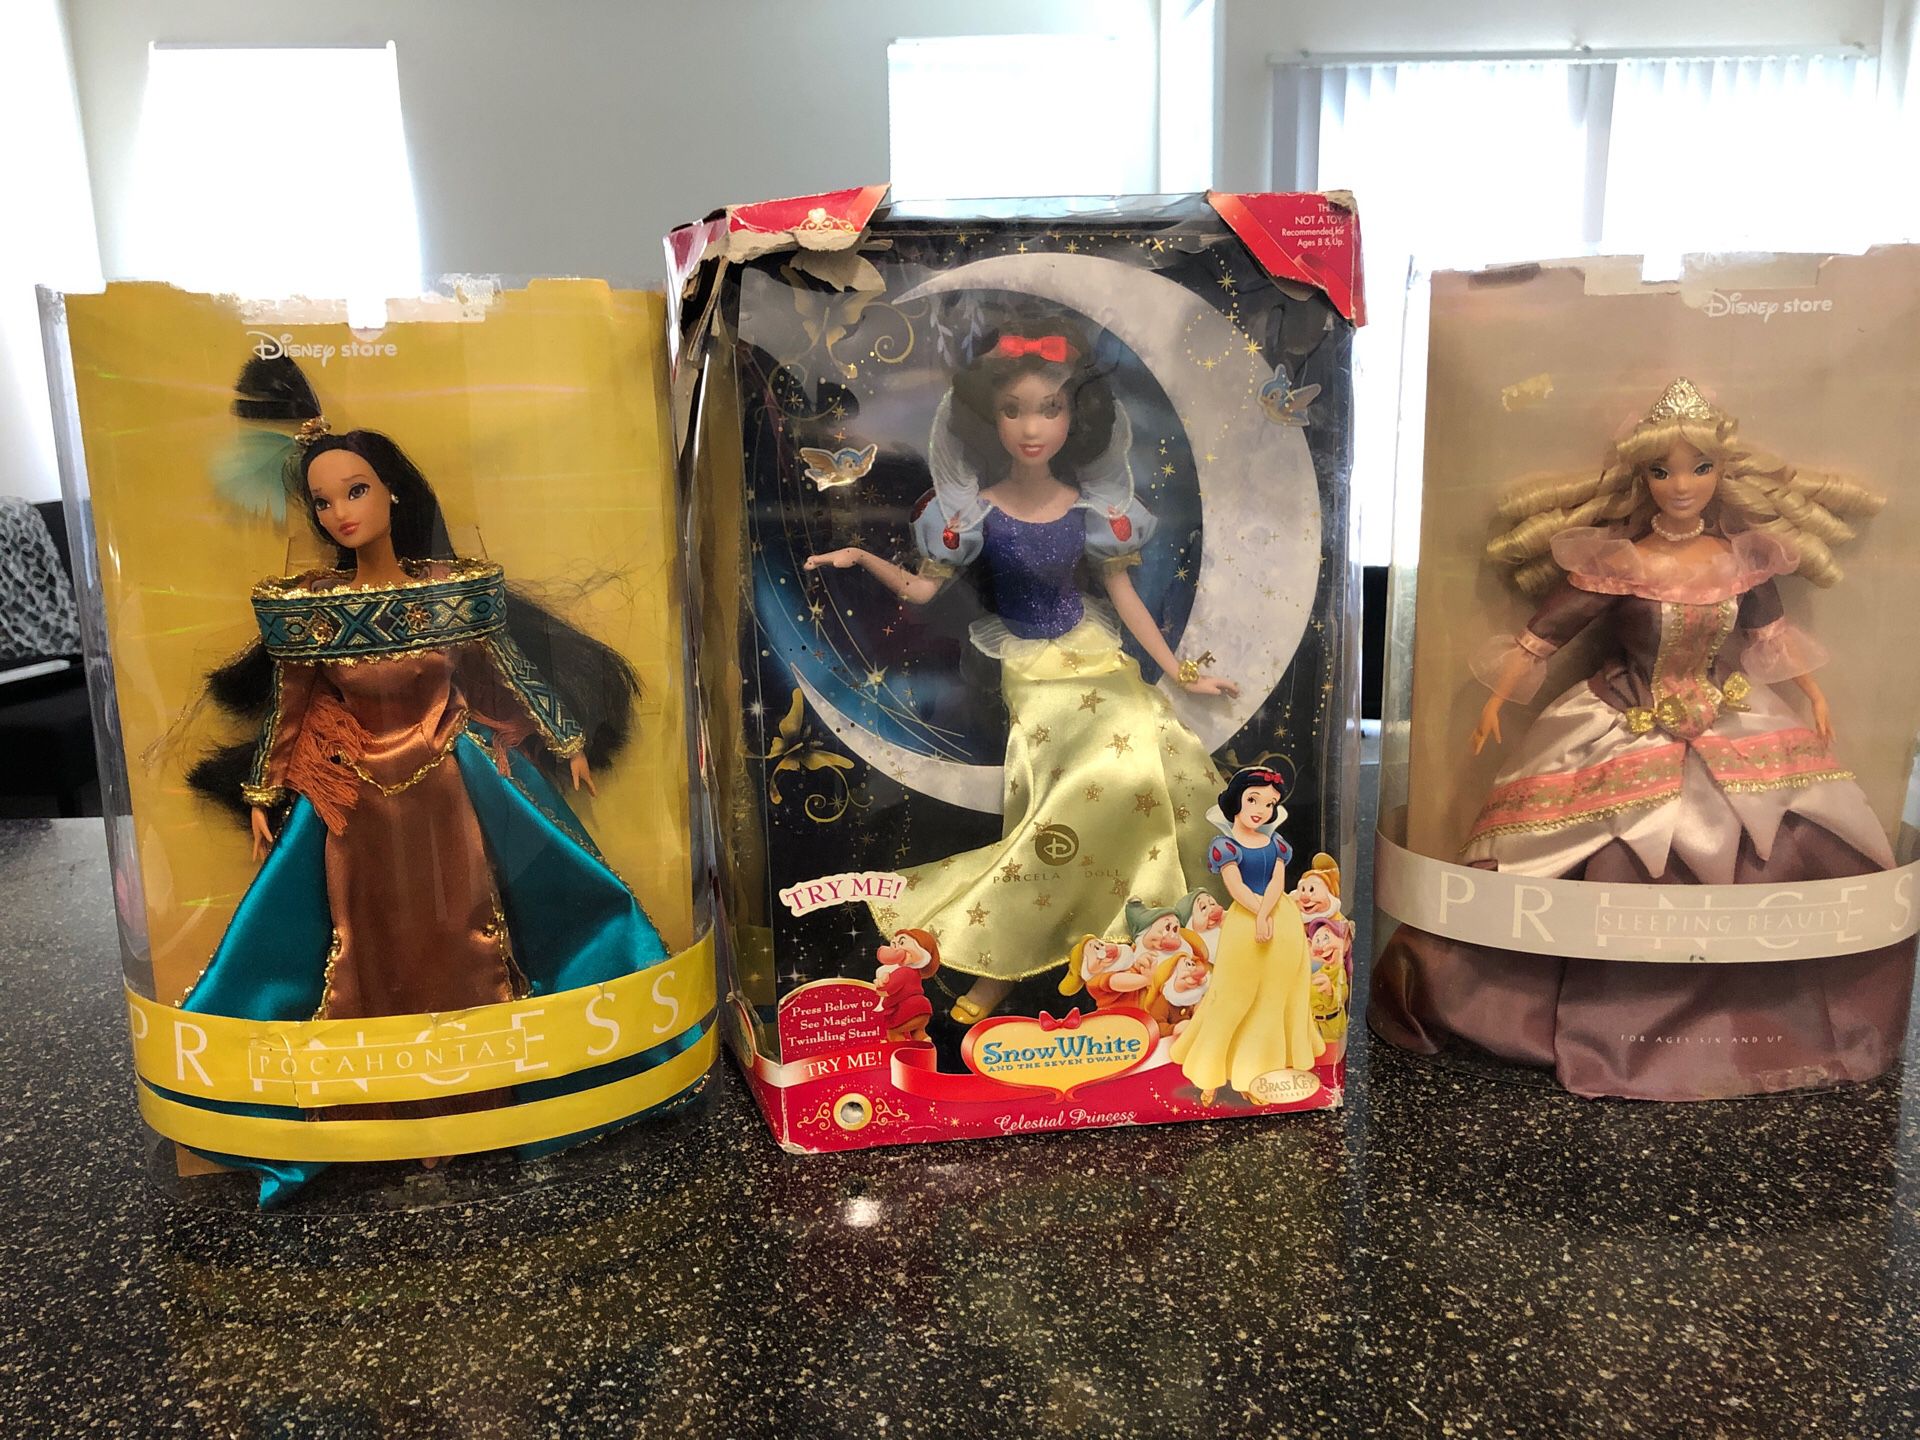 3 Disney princess dolls